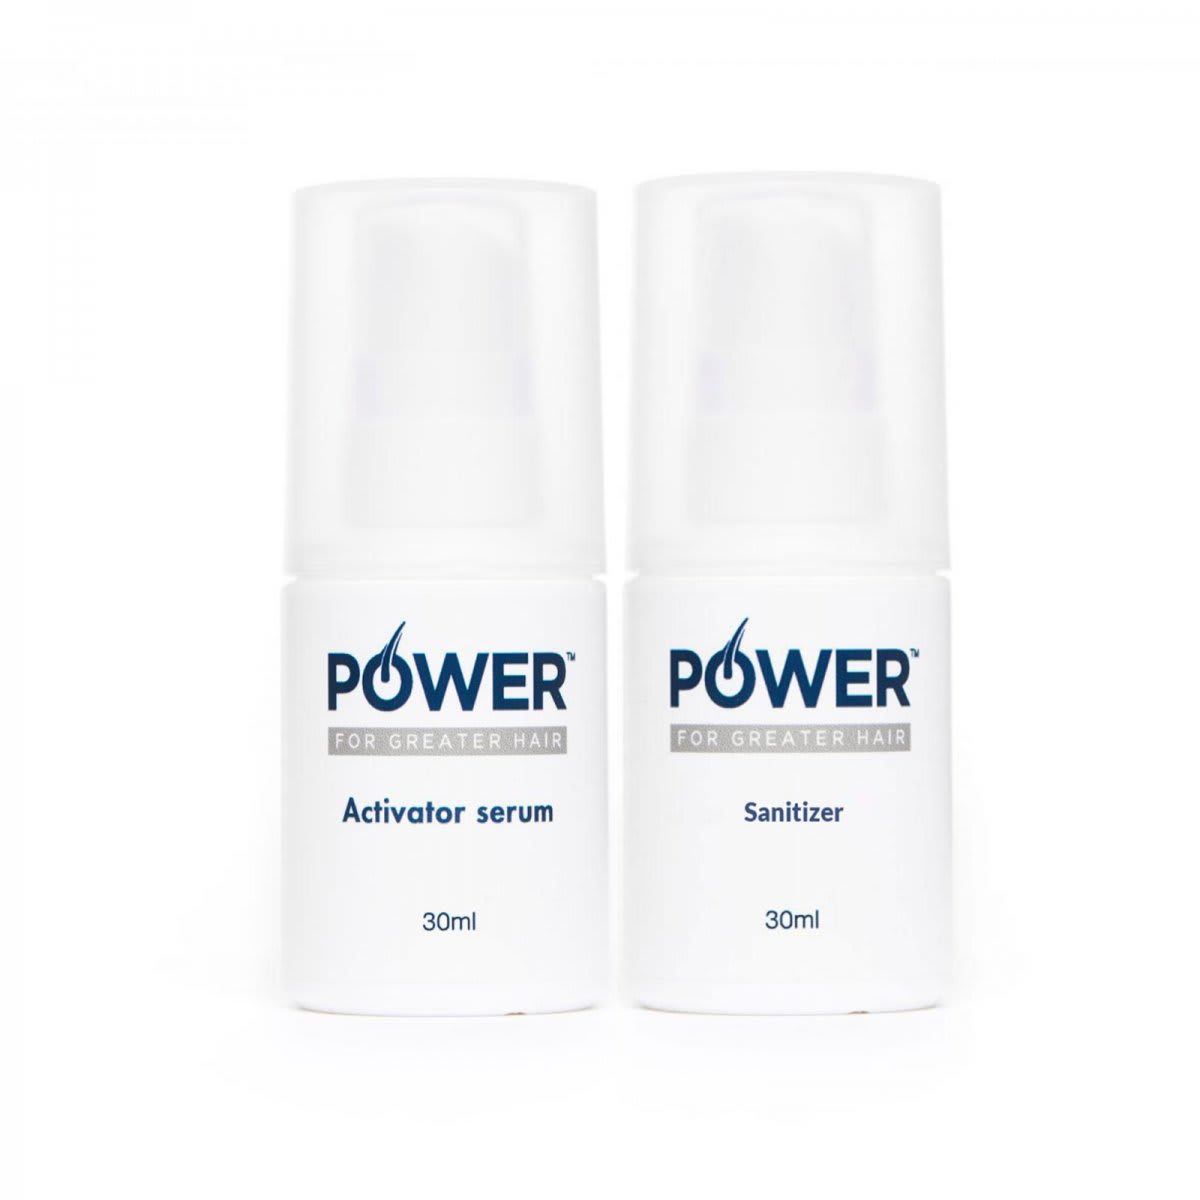 Power Sanitizer and Activator Serum